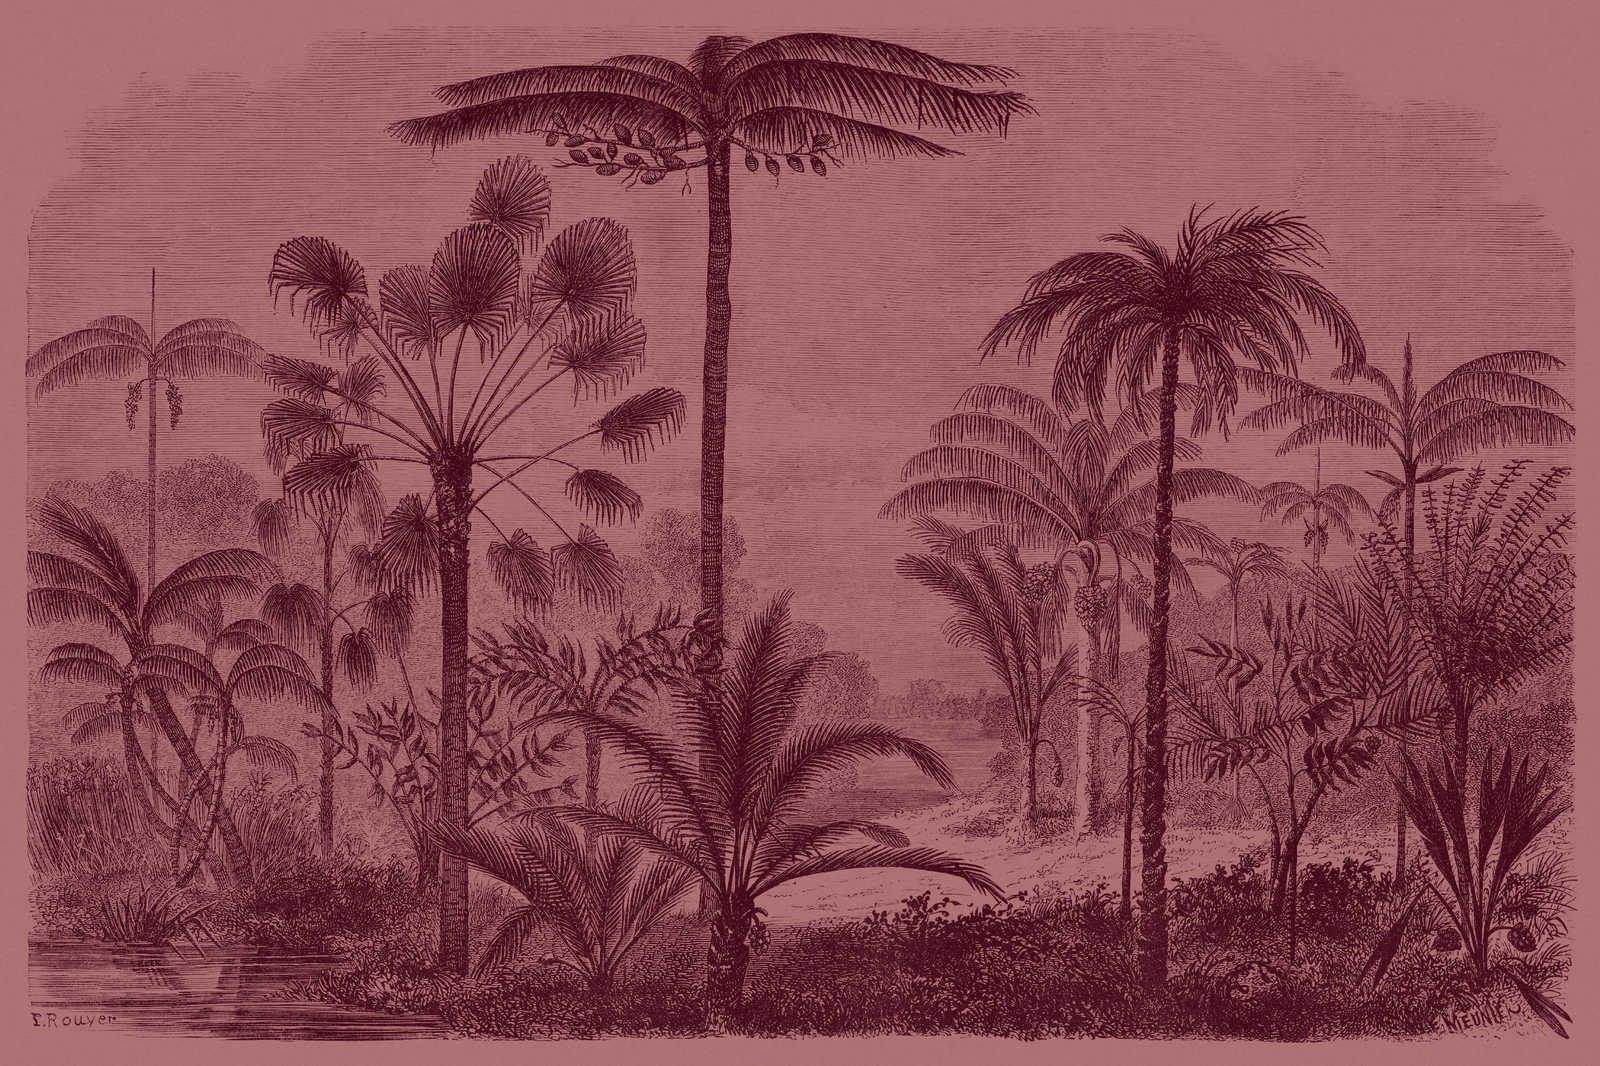             Jurassic 2 - Canvas schilderij Jungle motief koperplaat - 0.90 m x 0.60 m
        